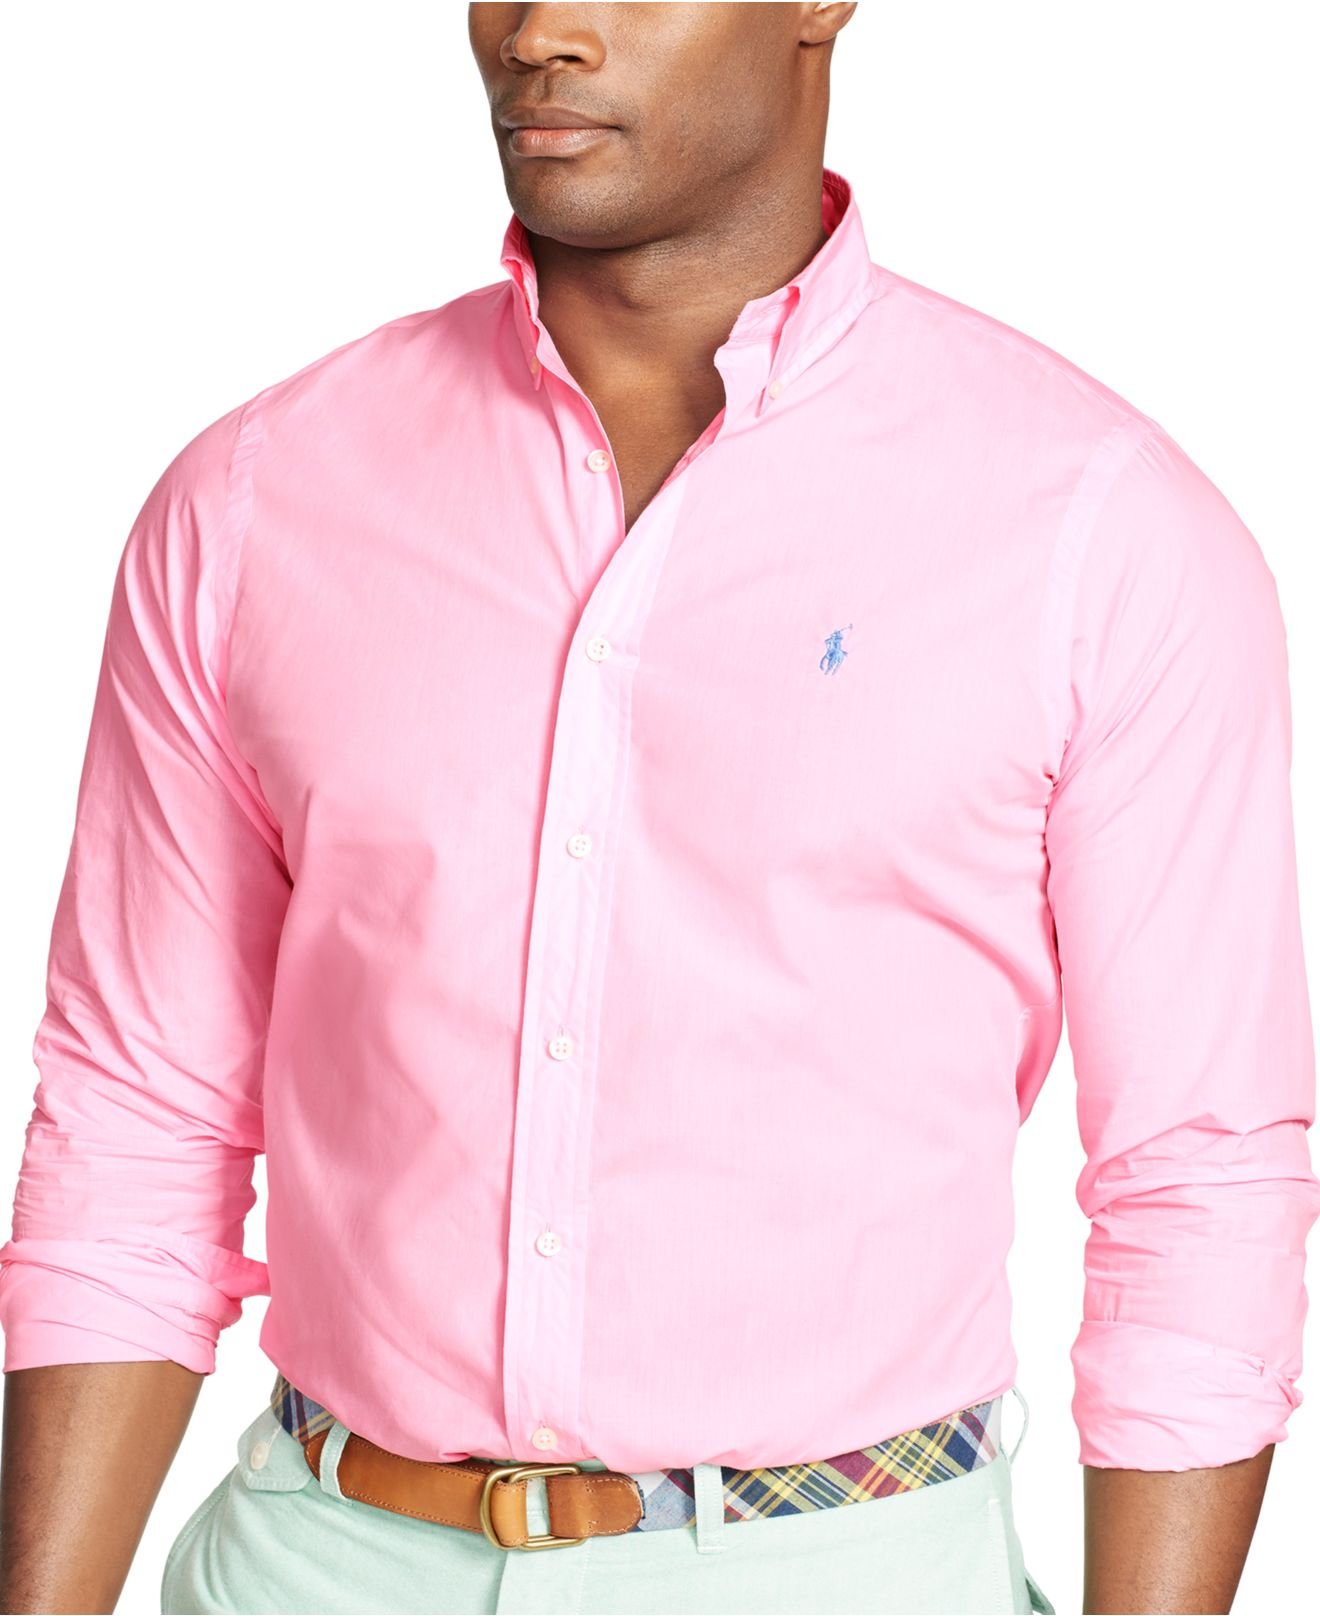 Lyst - Polo ralph lauren Big And Tall Long-Sleeve Poplin Shirt in Pink ...